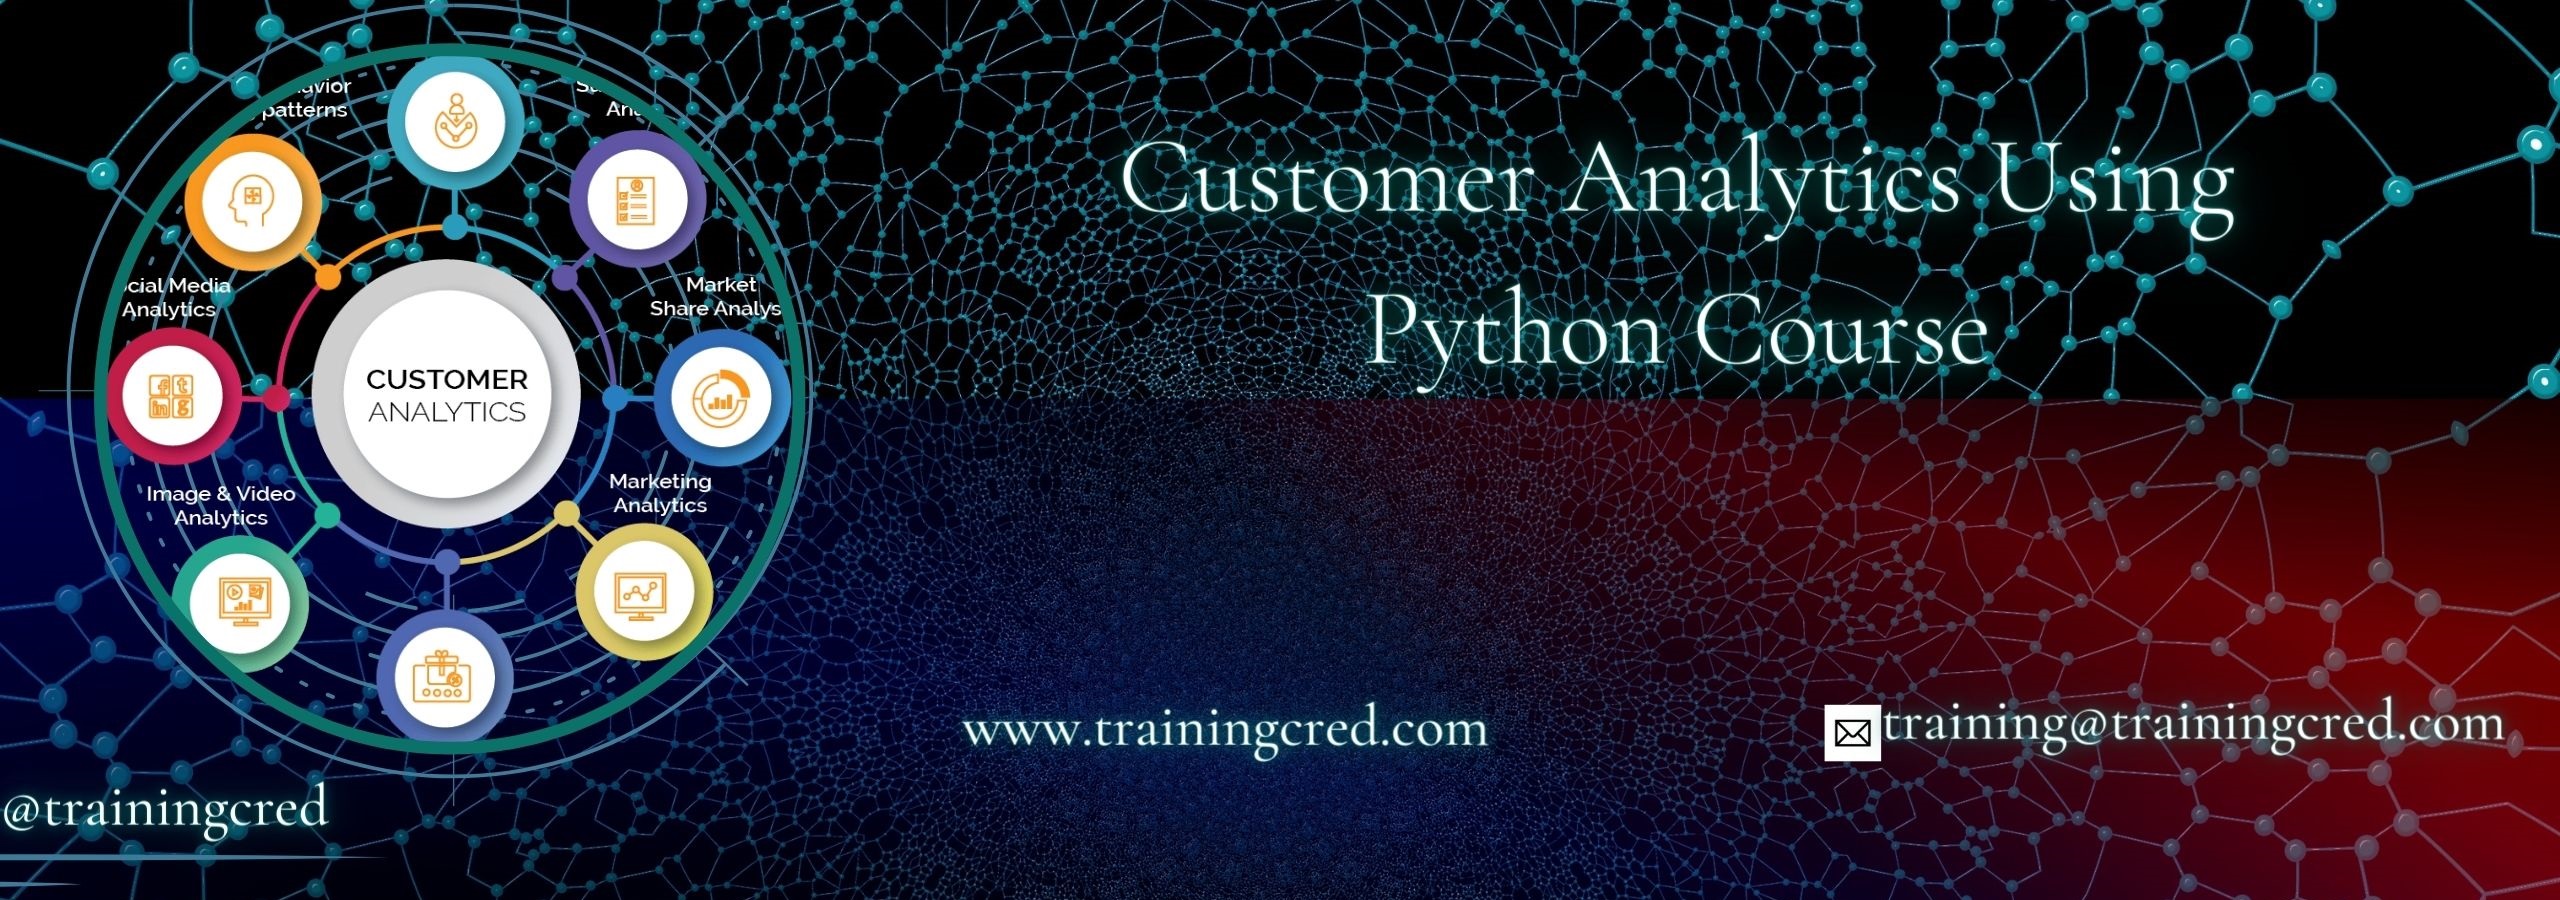 Customer Analytics Using Python Training